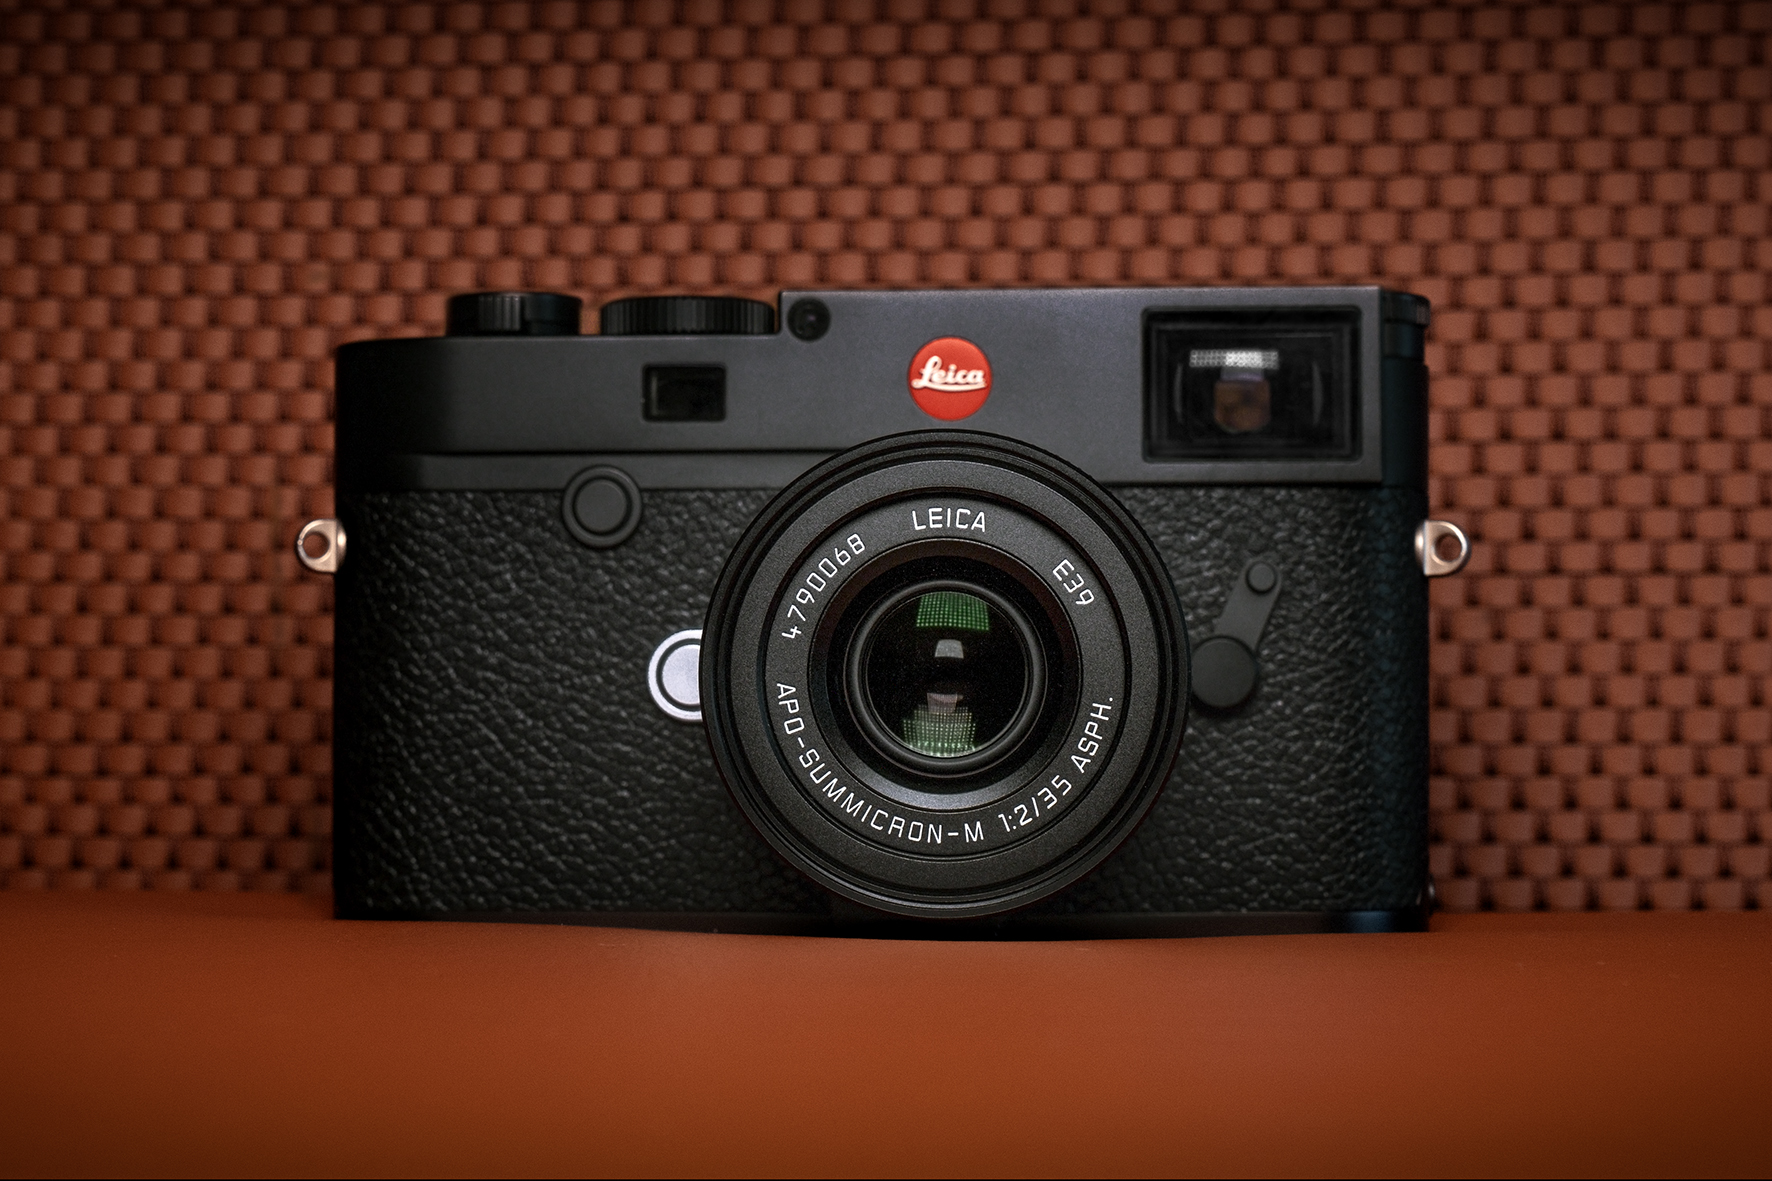 Leica ra mắt ống kính APO Summicron-M 35mm F2 ASPH